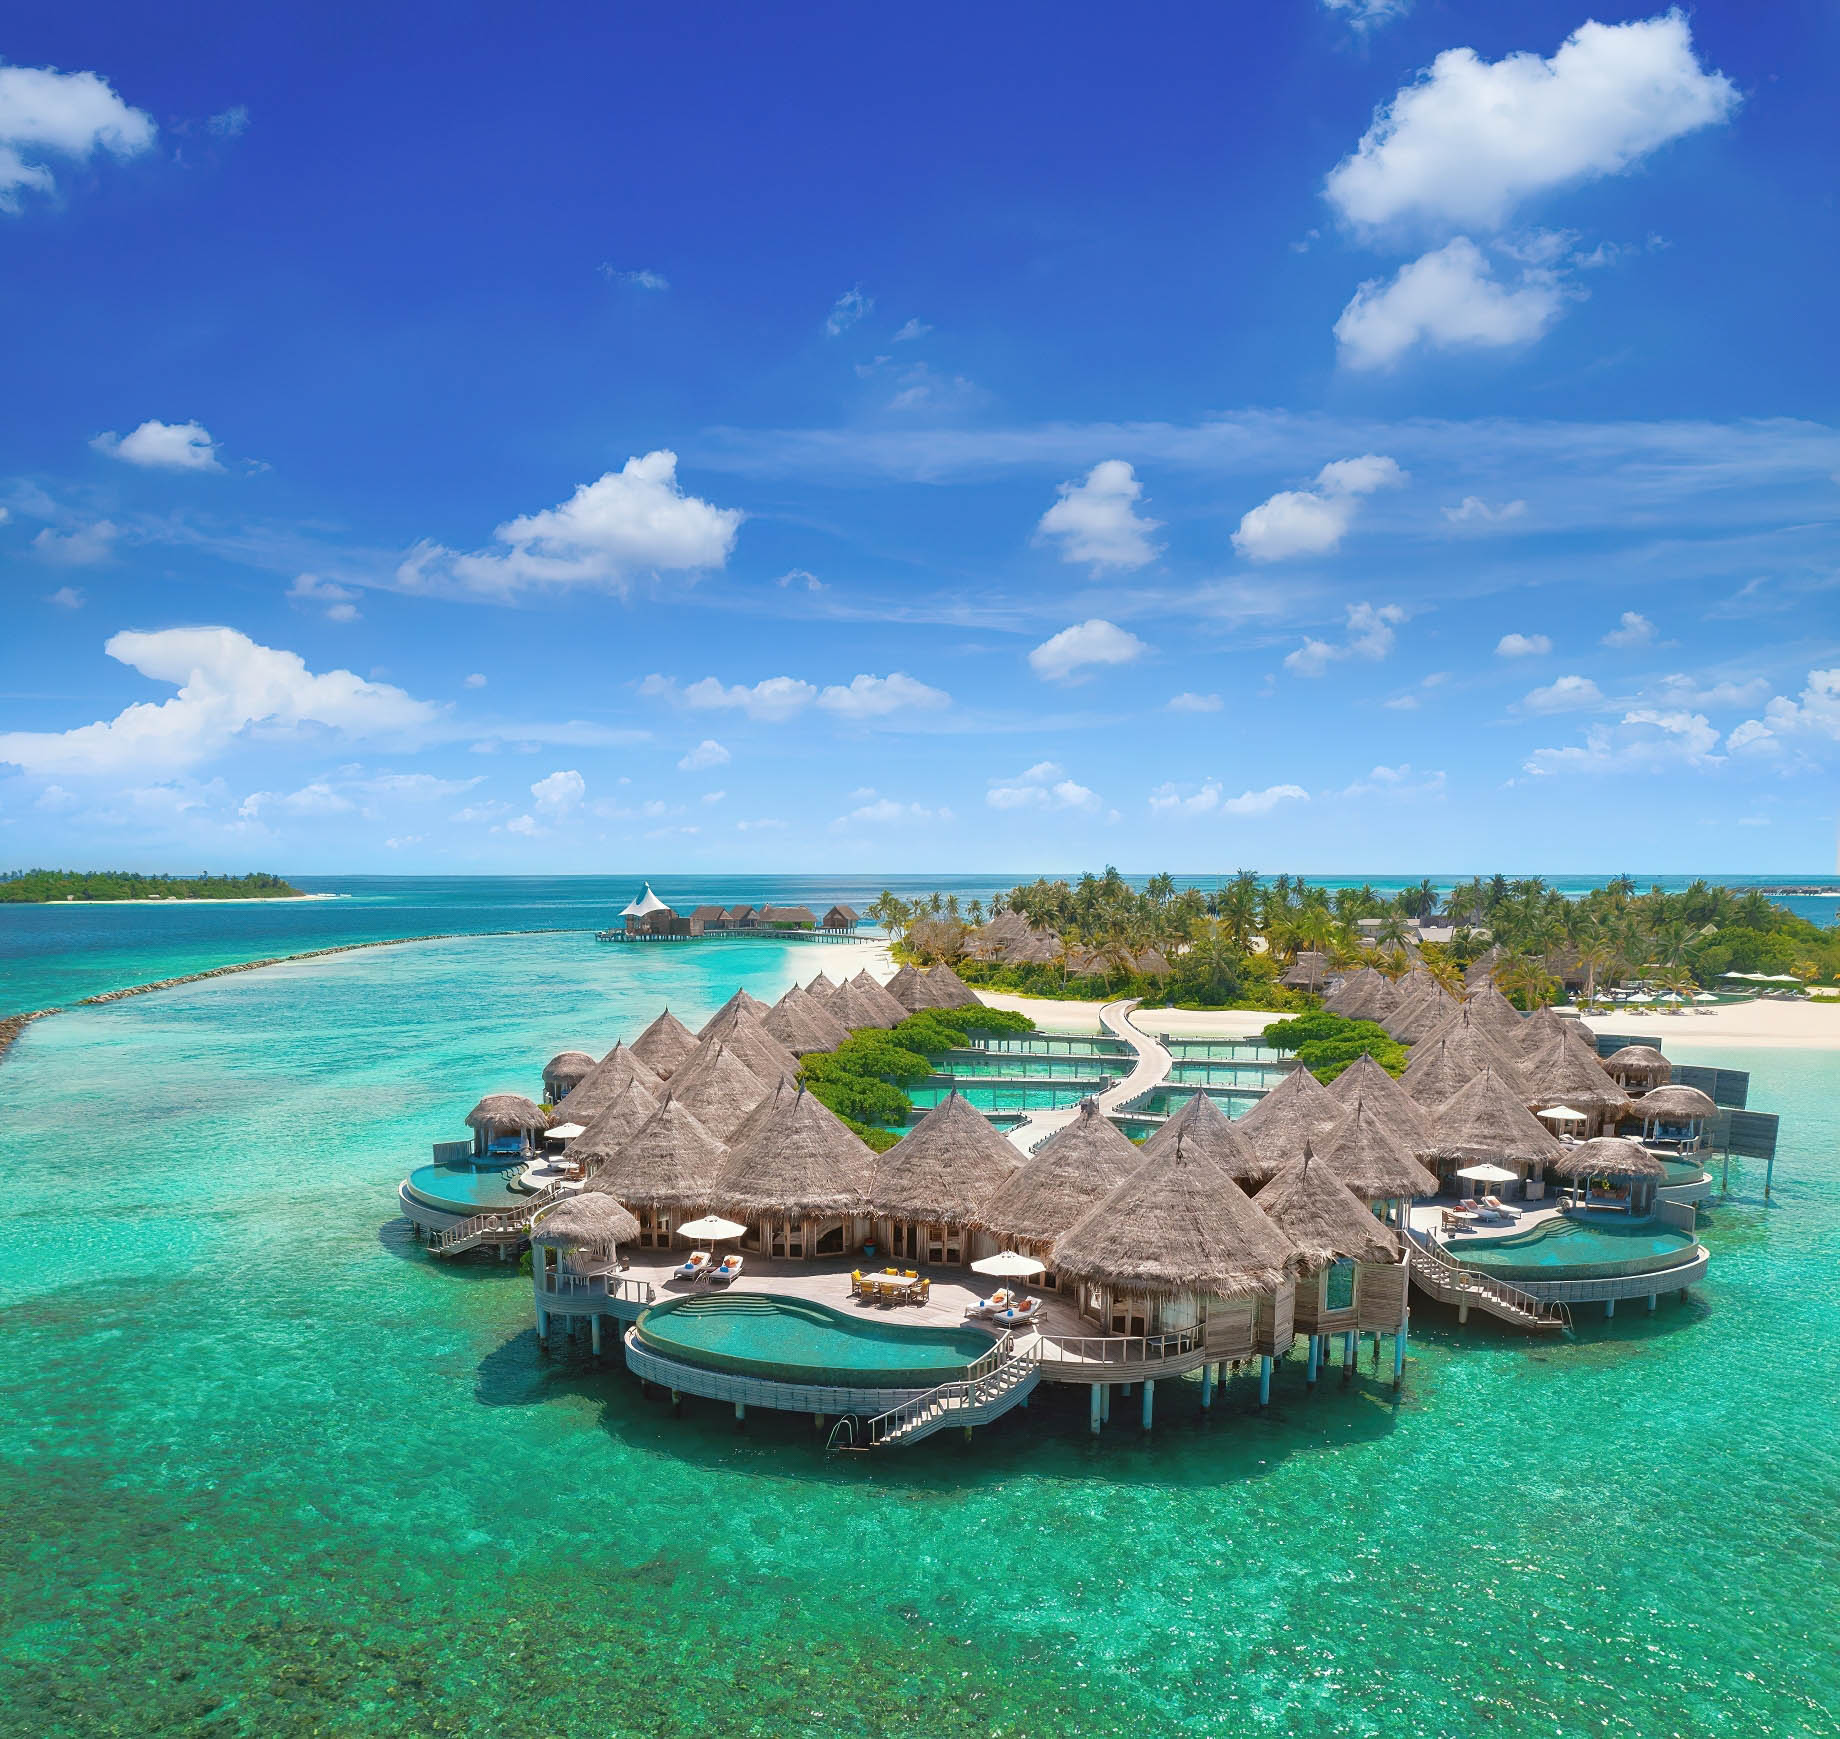 The Nautilus Maldives Resort – Thiladhoo Island, Maldives – The Nautilus Overwater Villas